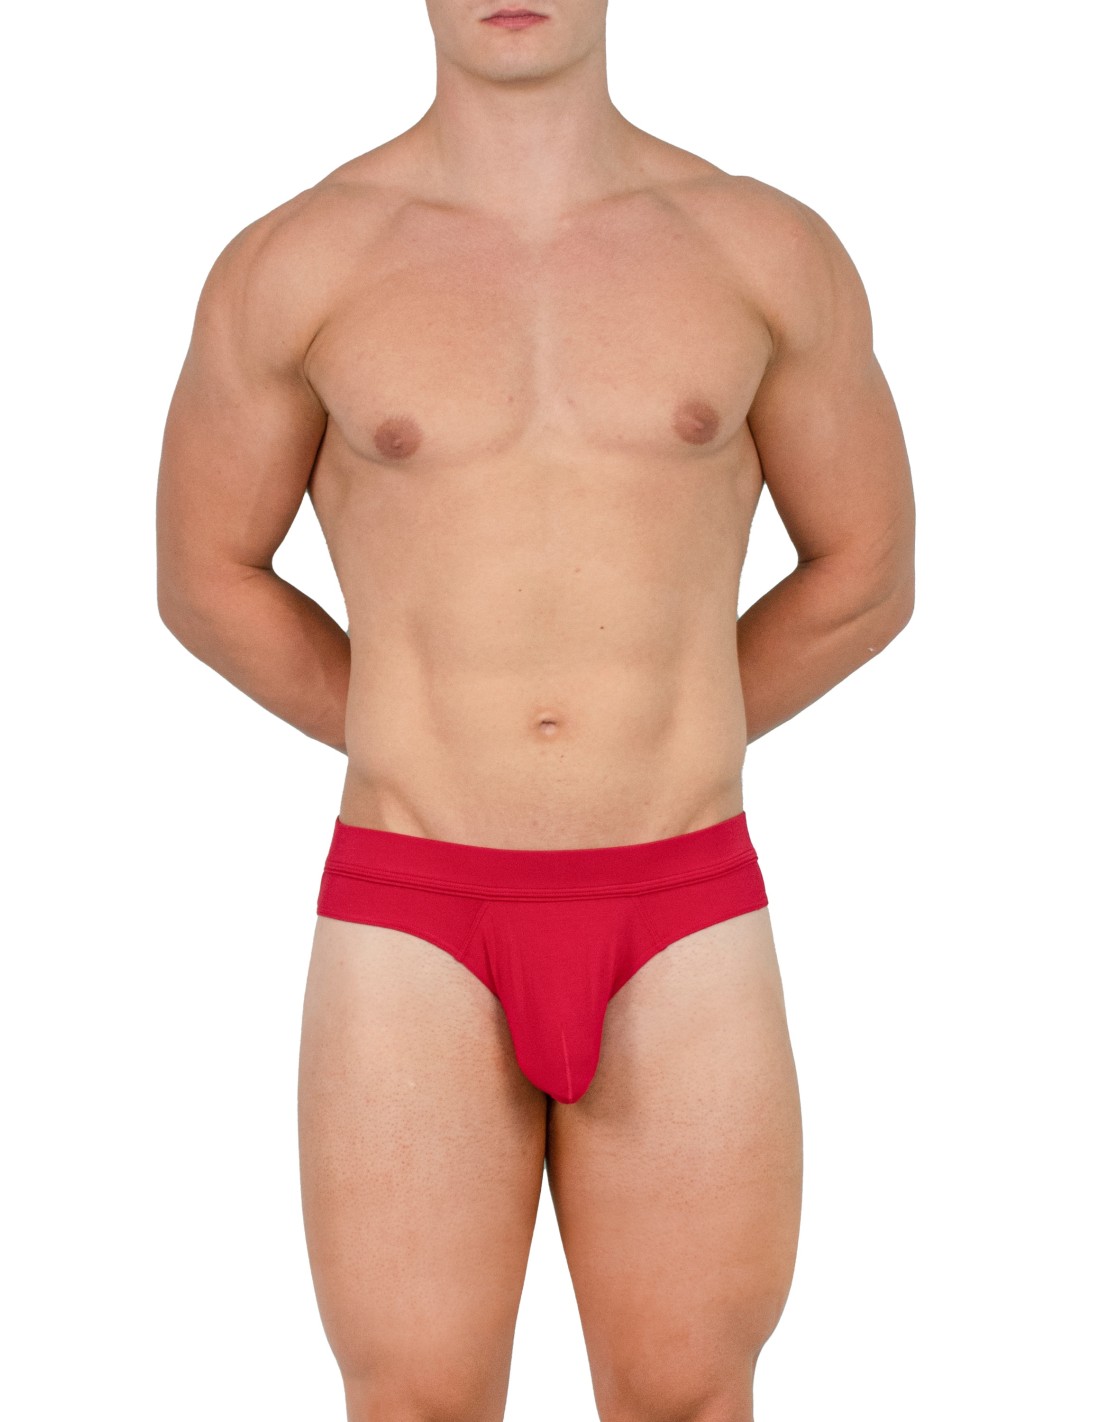 https://menandunderwear.com/shop/6037-thickbox_default/obviously-apparel-eliteman-hipster-briefs-red.jpg